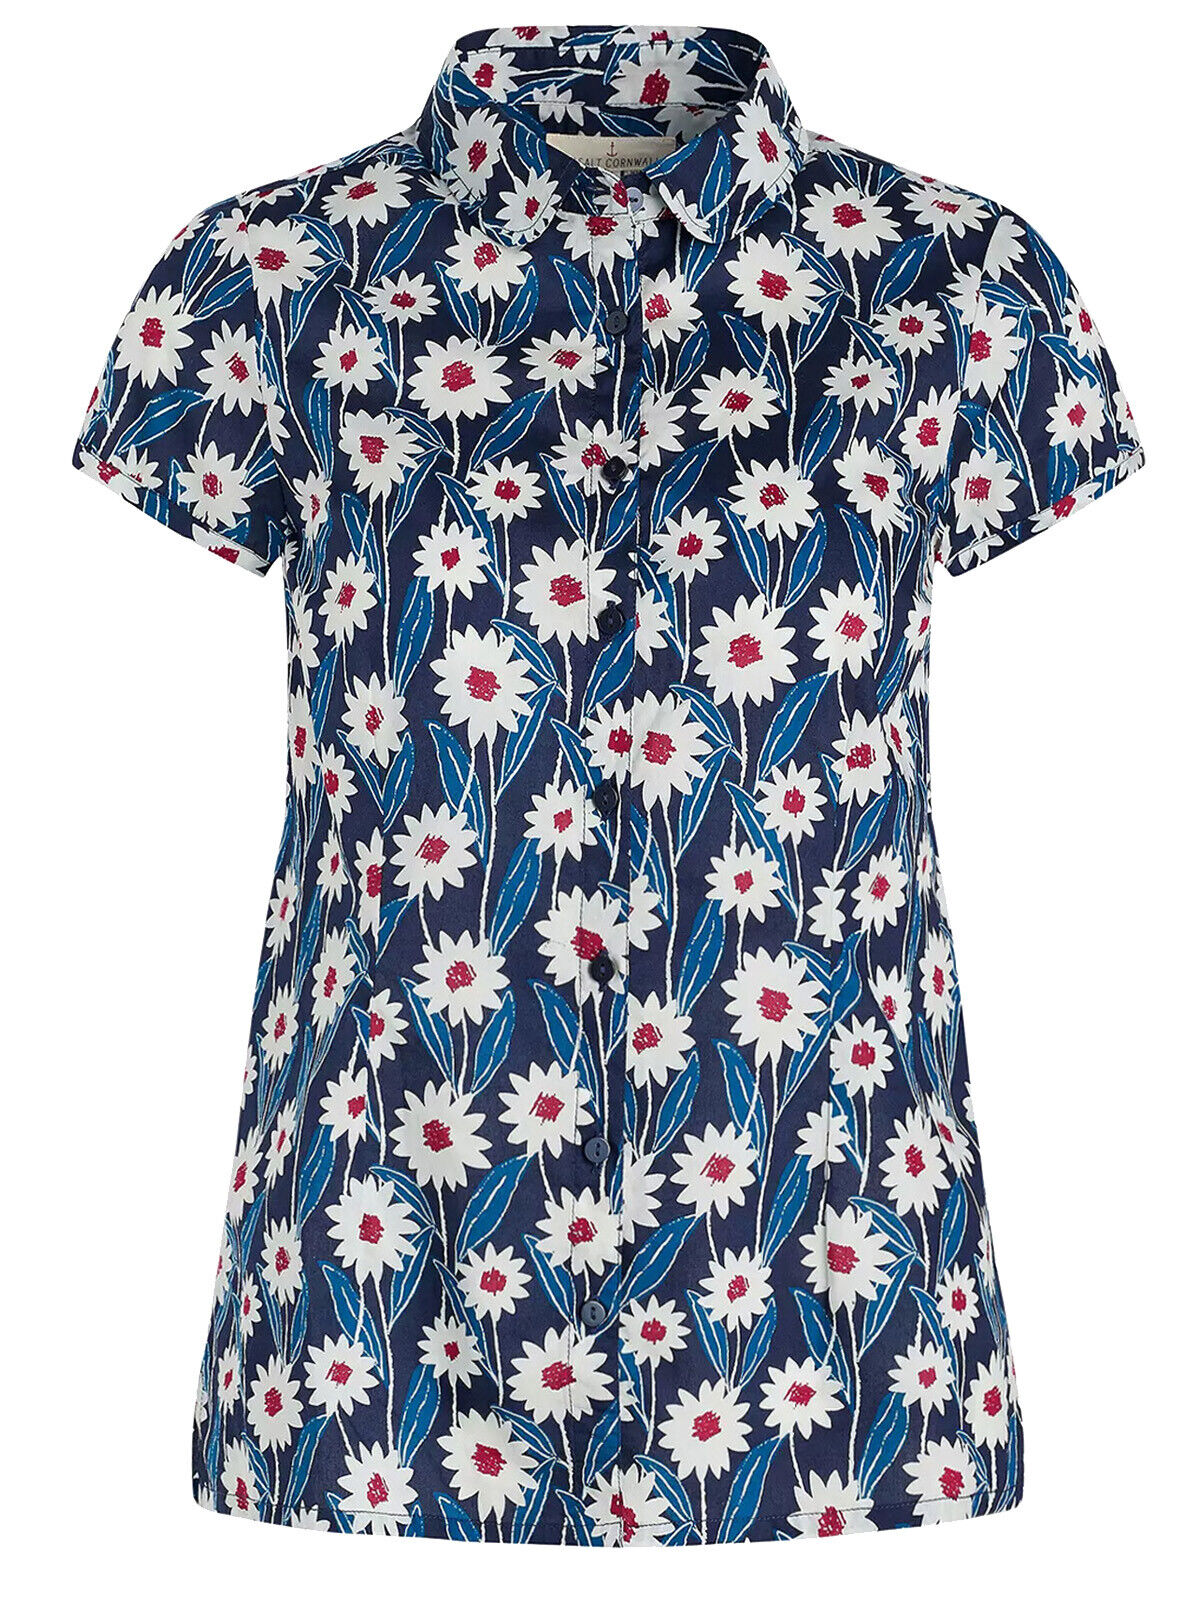 EX SEASALT Navy Floral Rushmaker Cotton Voile Shirt Sizes 8 10 12 16 RRP £39.95